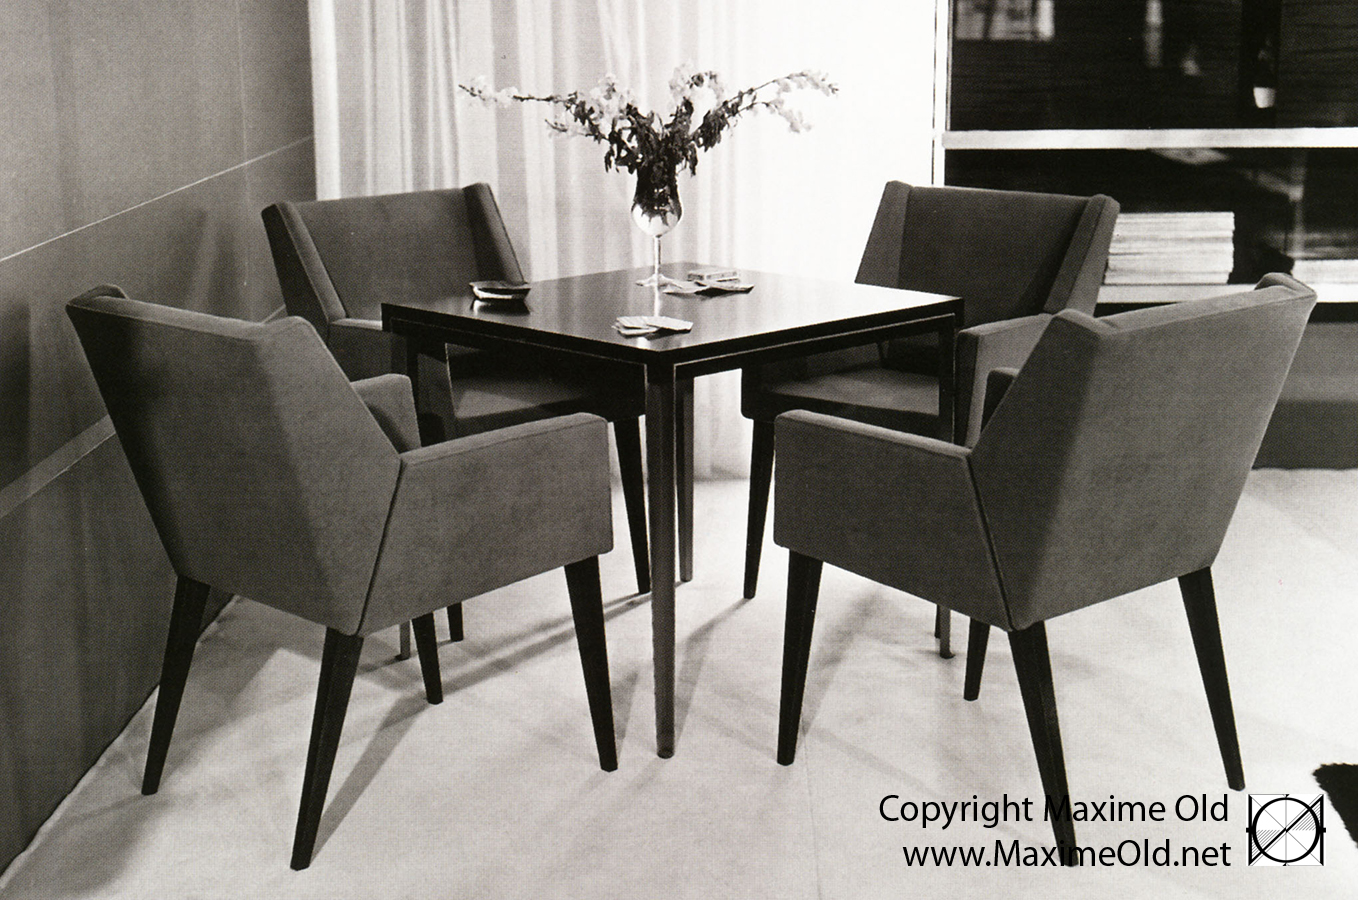 Paquebot France Bridge Armchair and Onyx Table SAD 1961 : Maxime Old - Modern Art Furniture Designer